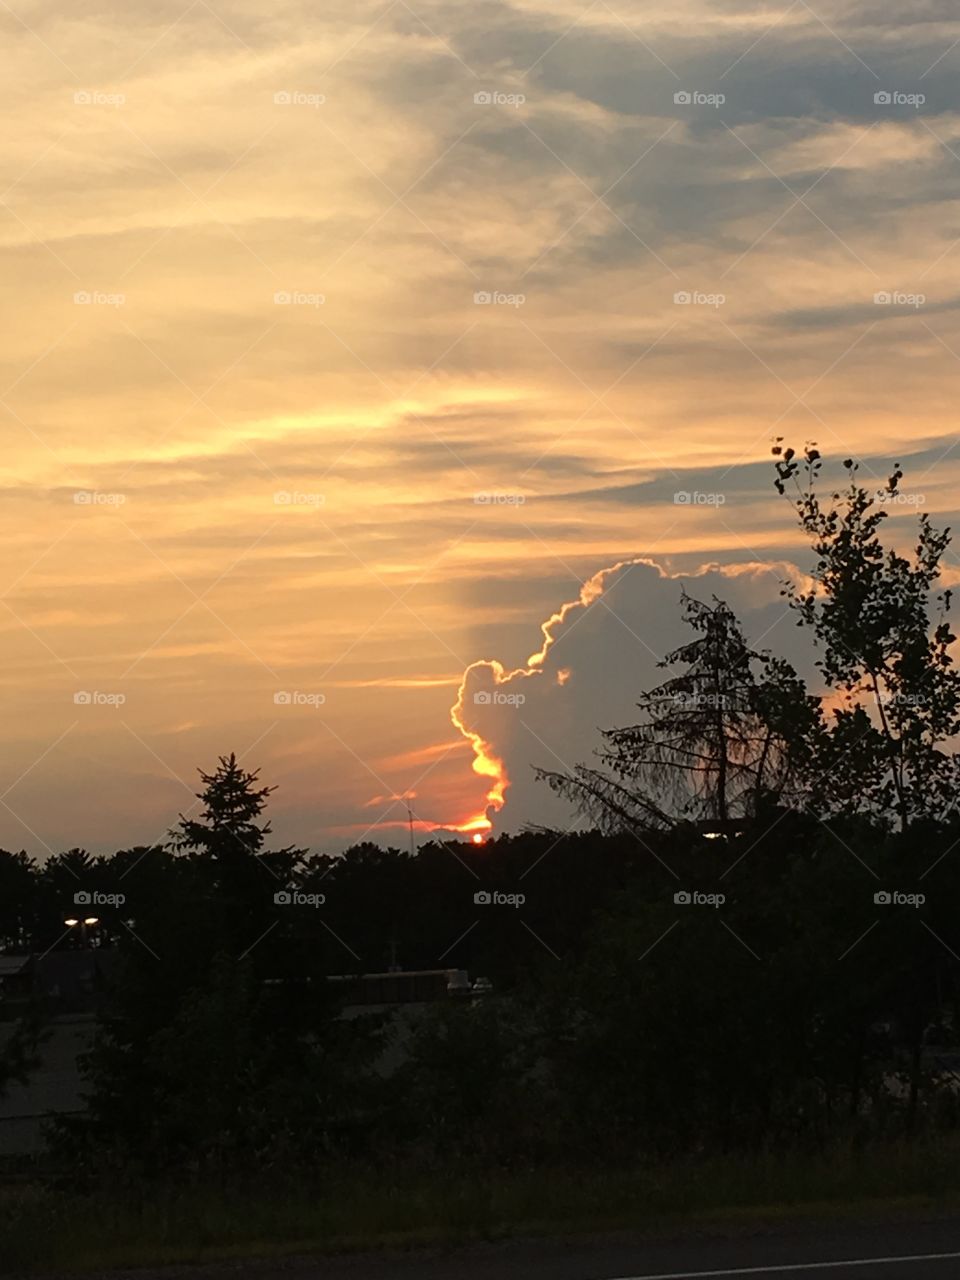 Sunset cool cloud